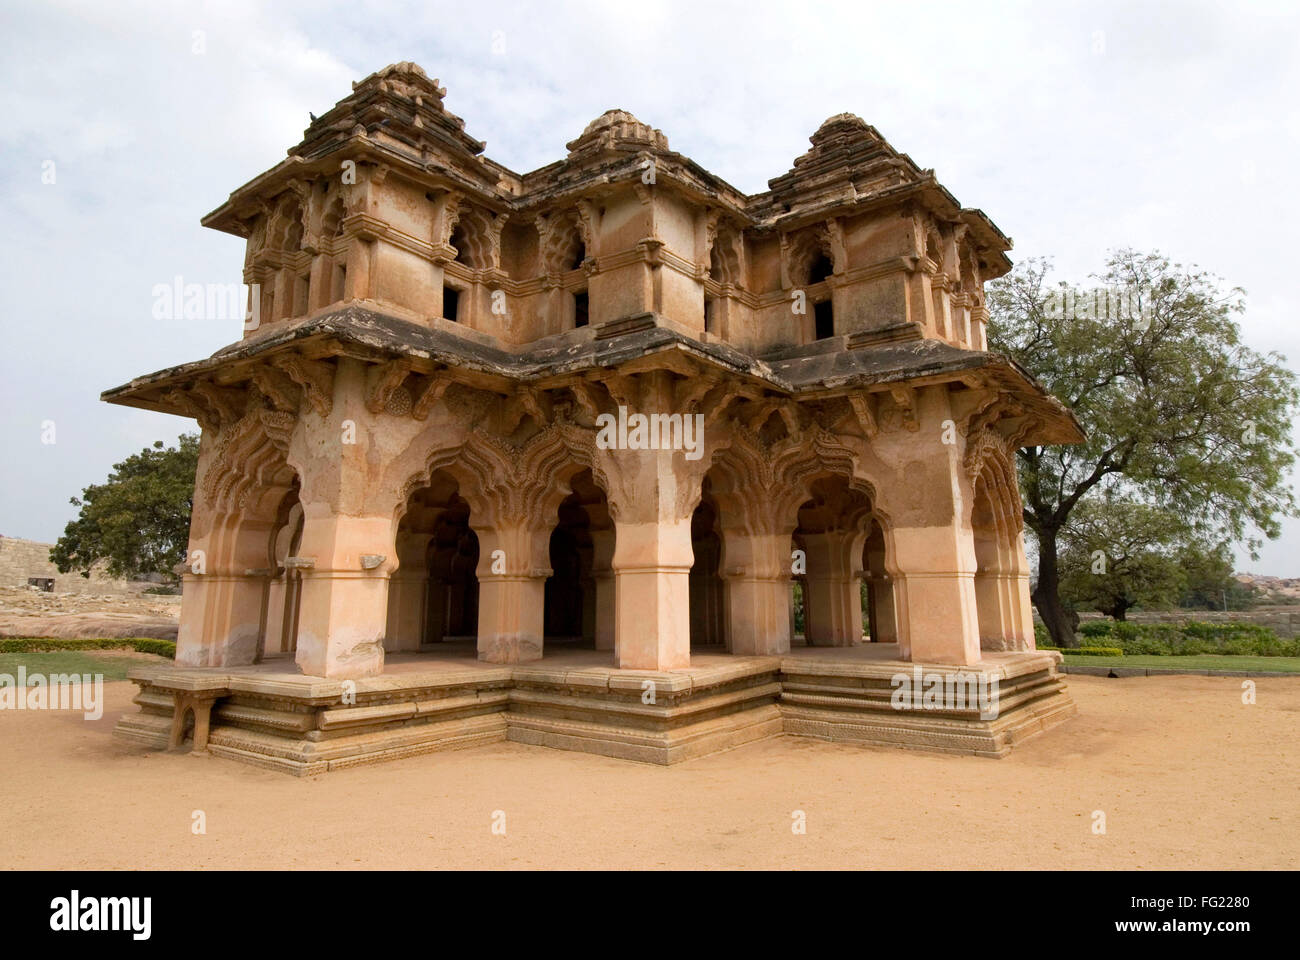 Lotus mahal amazing synthèse de style islamique et hindoue Hampi , Karnataka , Inde Banque D'Images